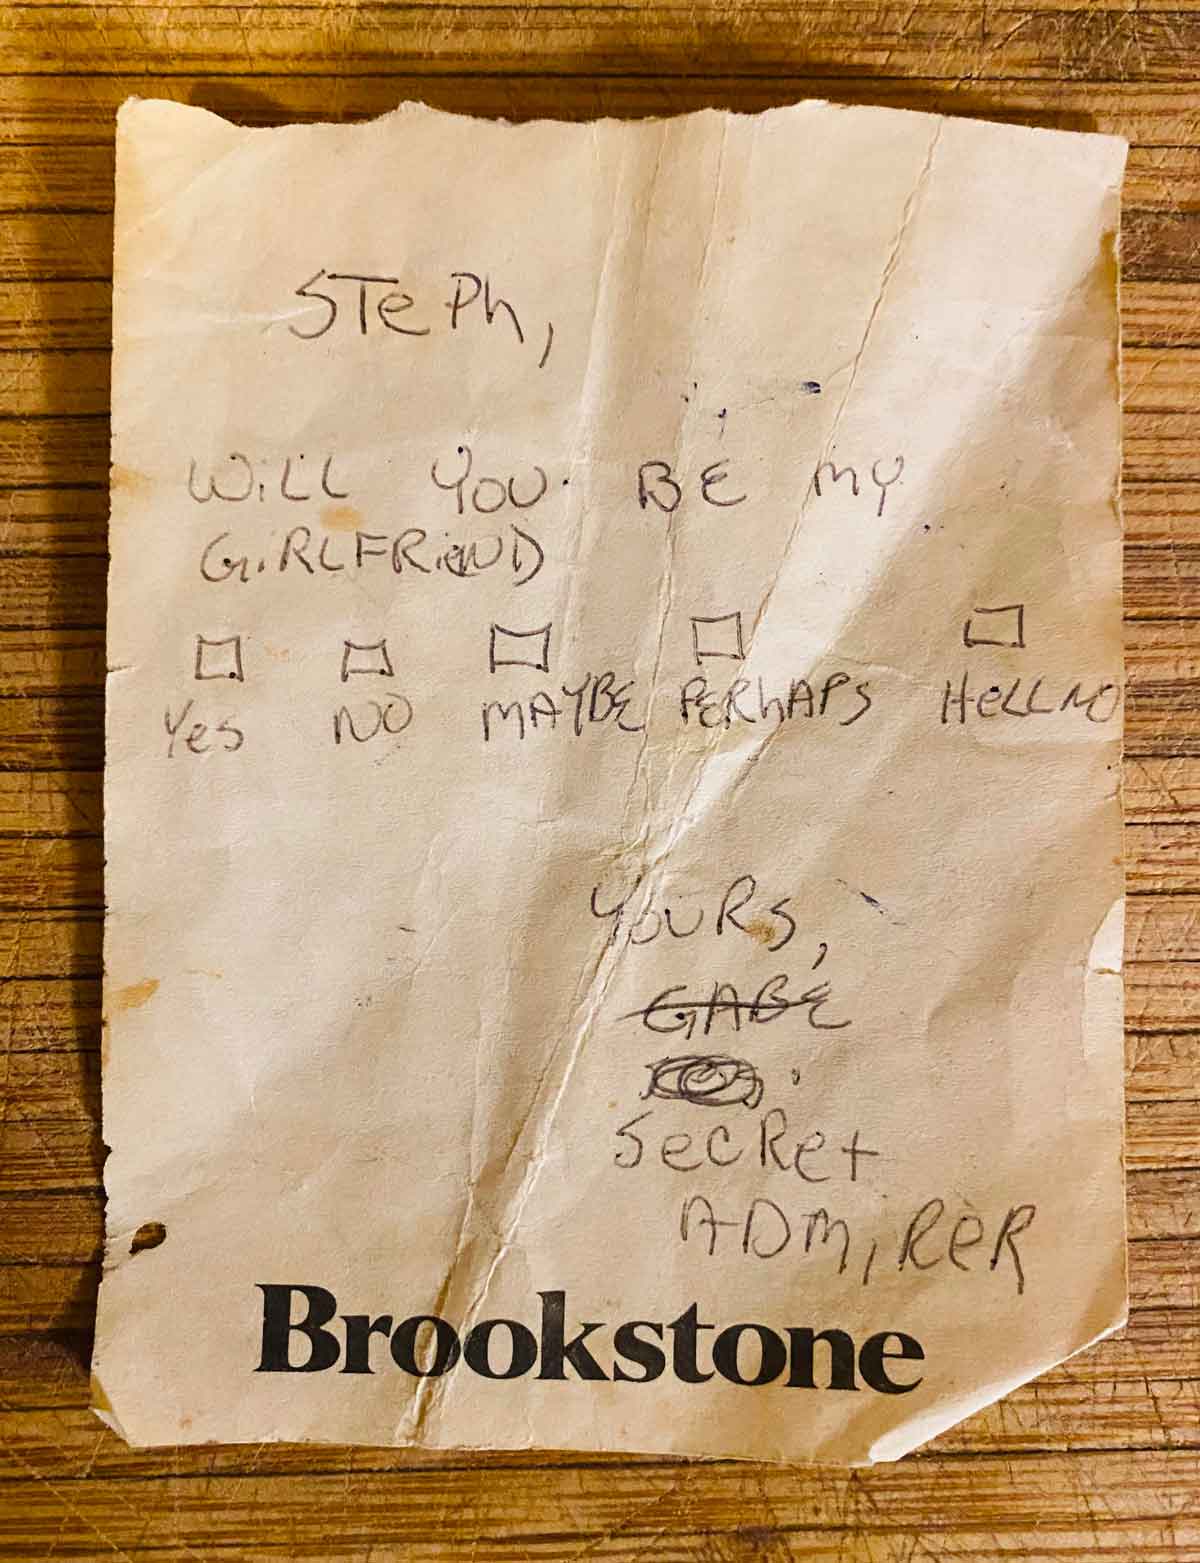 Found a love note, circa 1988